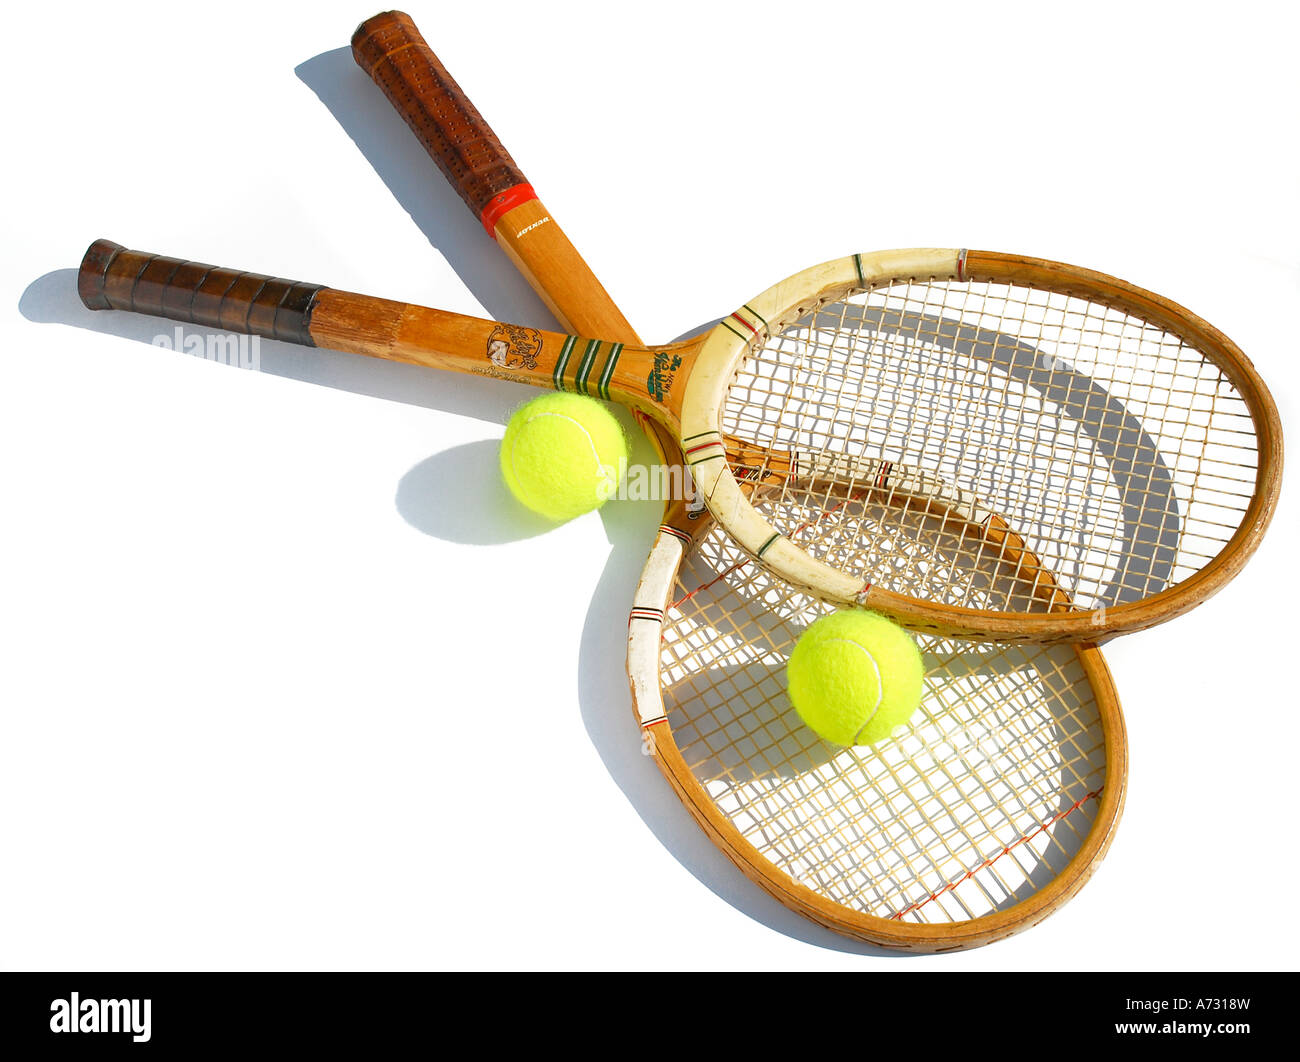 Slazenger tennis balls hi-res stock photography and images - Alamy